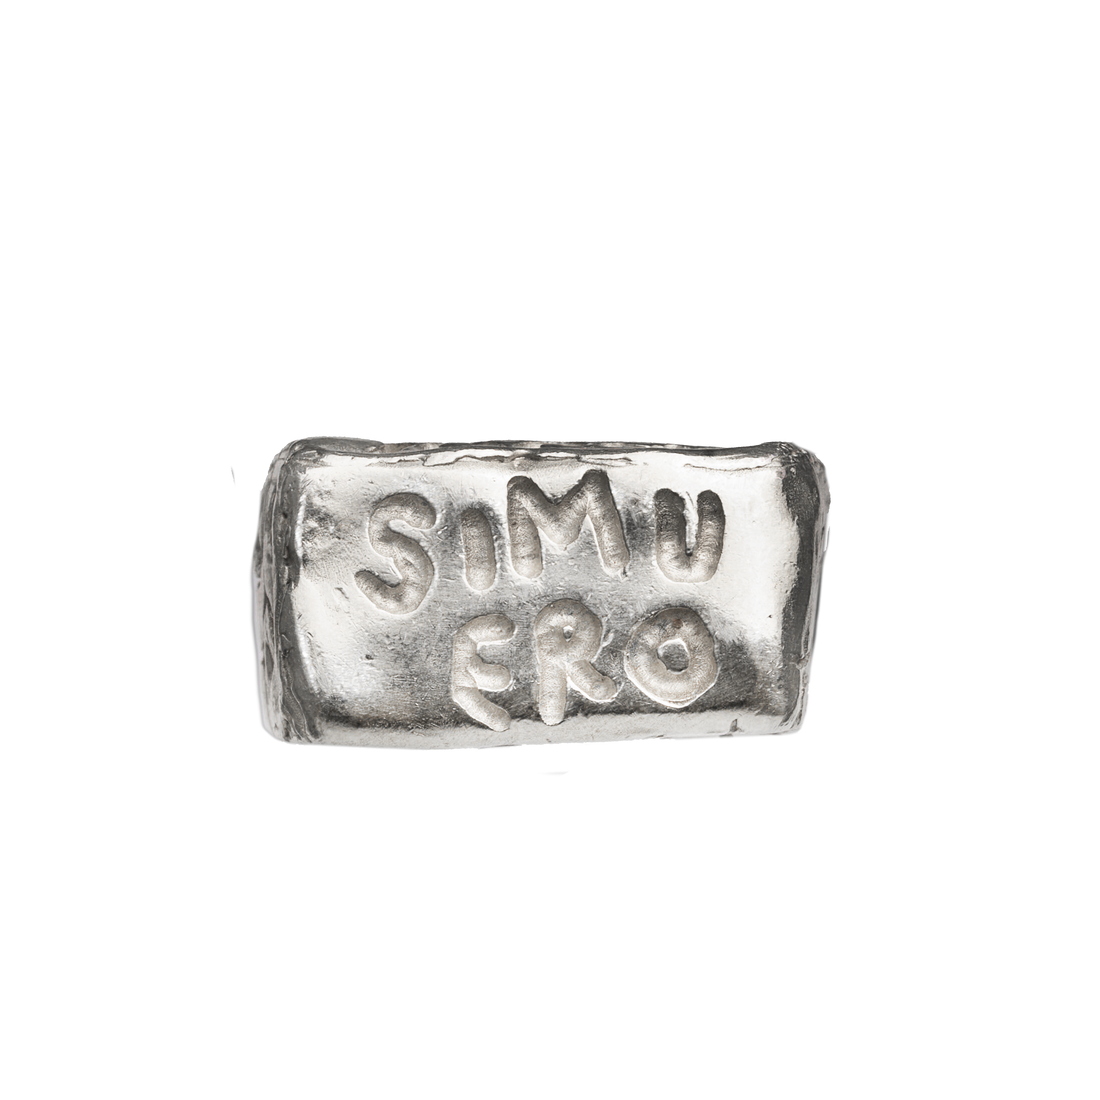 SELLO SIMUERO - Handmade silver ring | Simuero